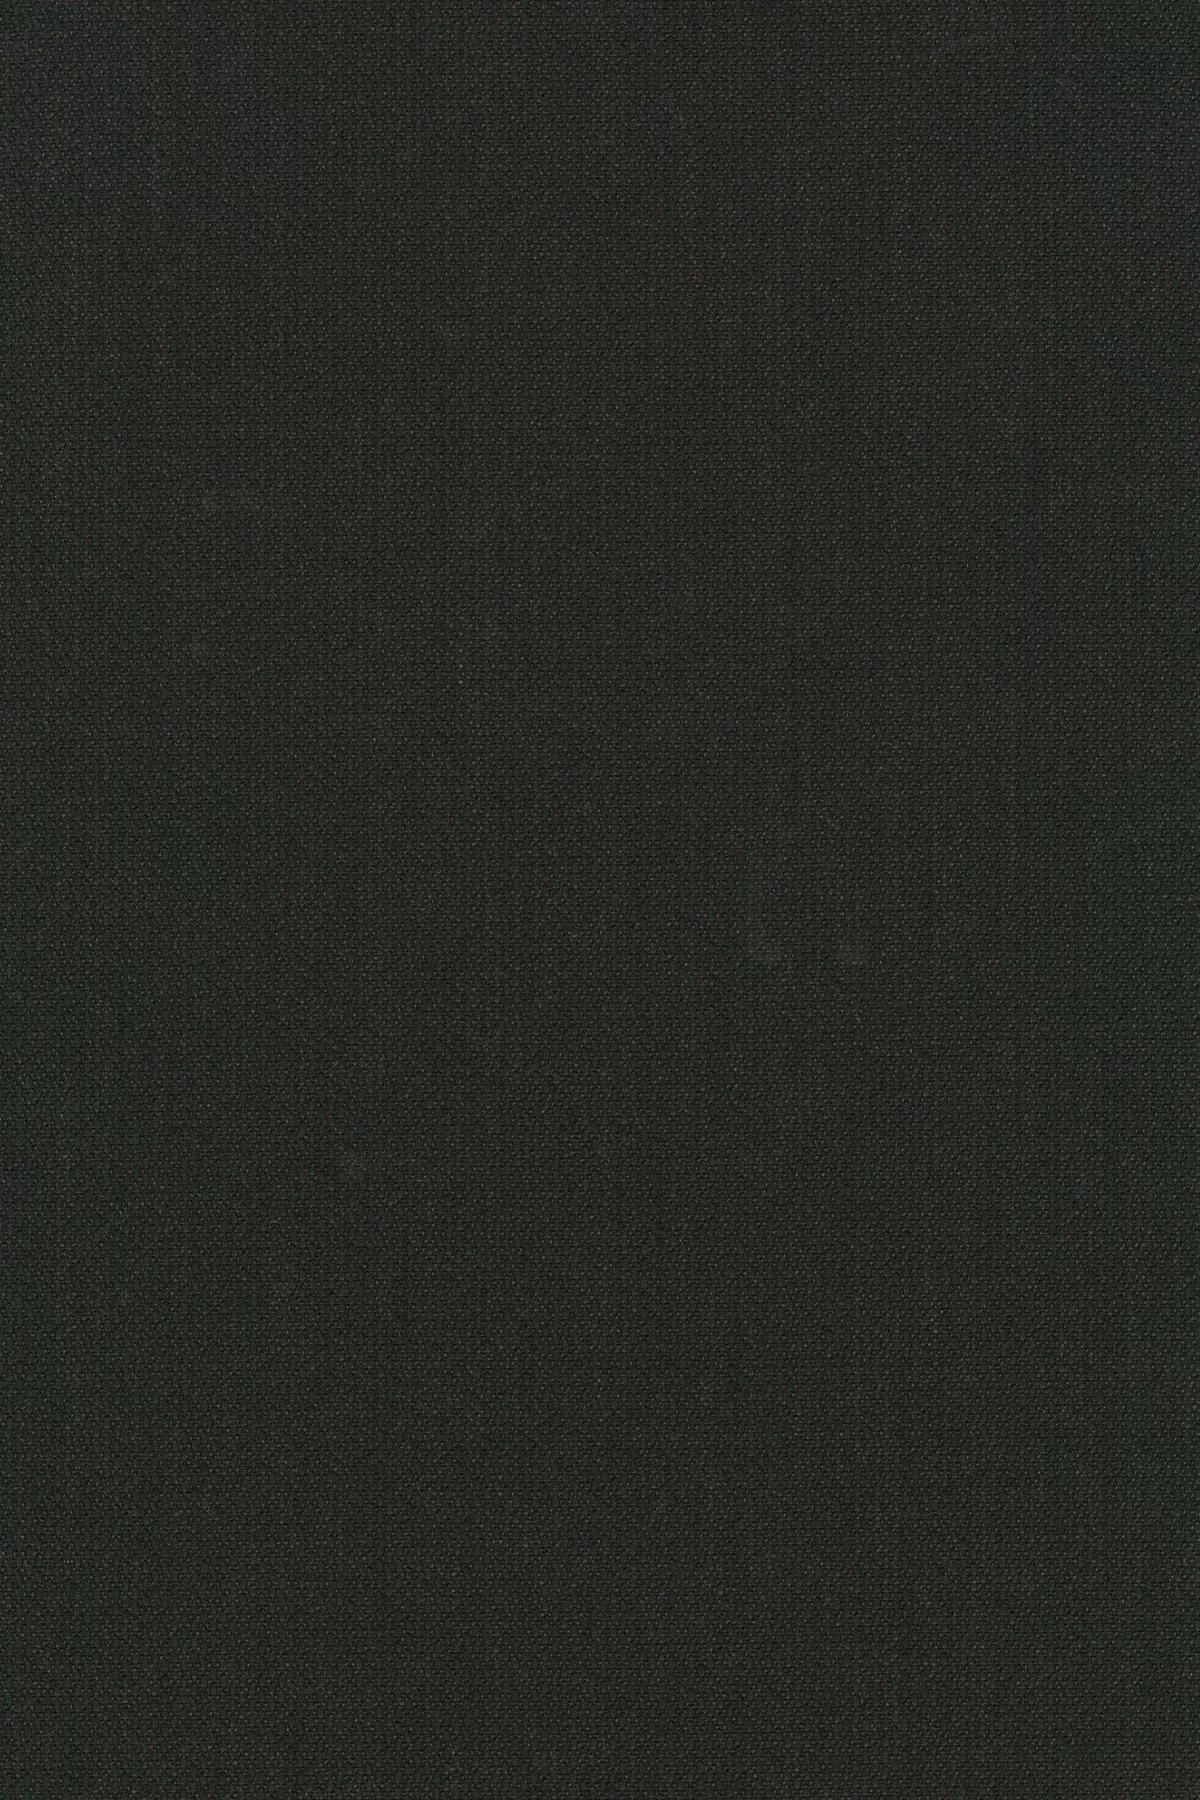 Fabric sample Fiord 991 grey